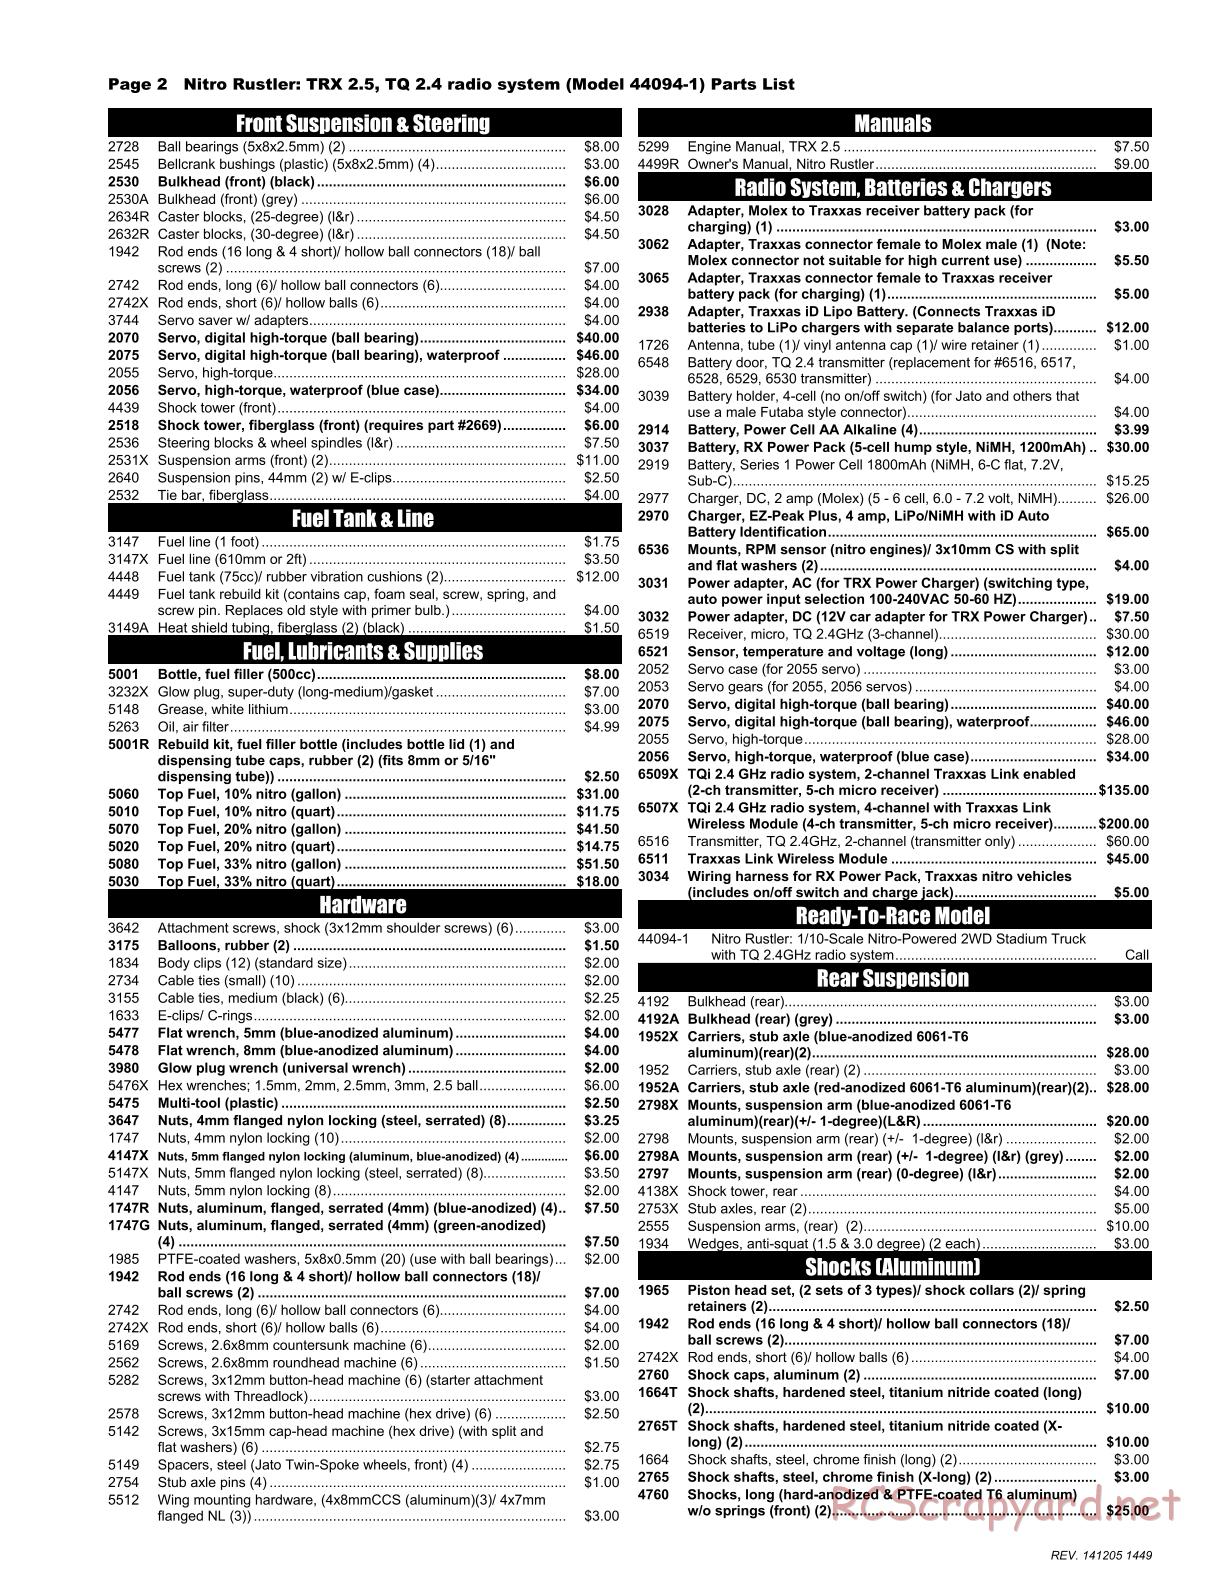 Traxxas - Nitro Rustler (2015) - Parts List - Page 2